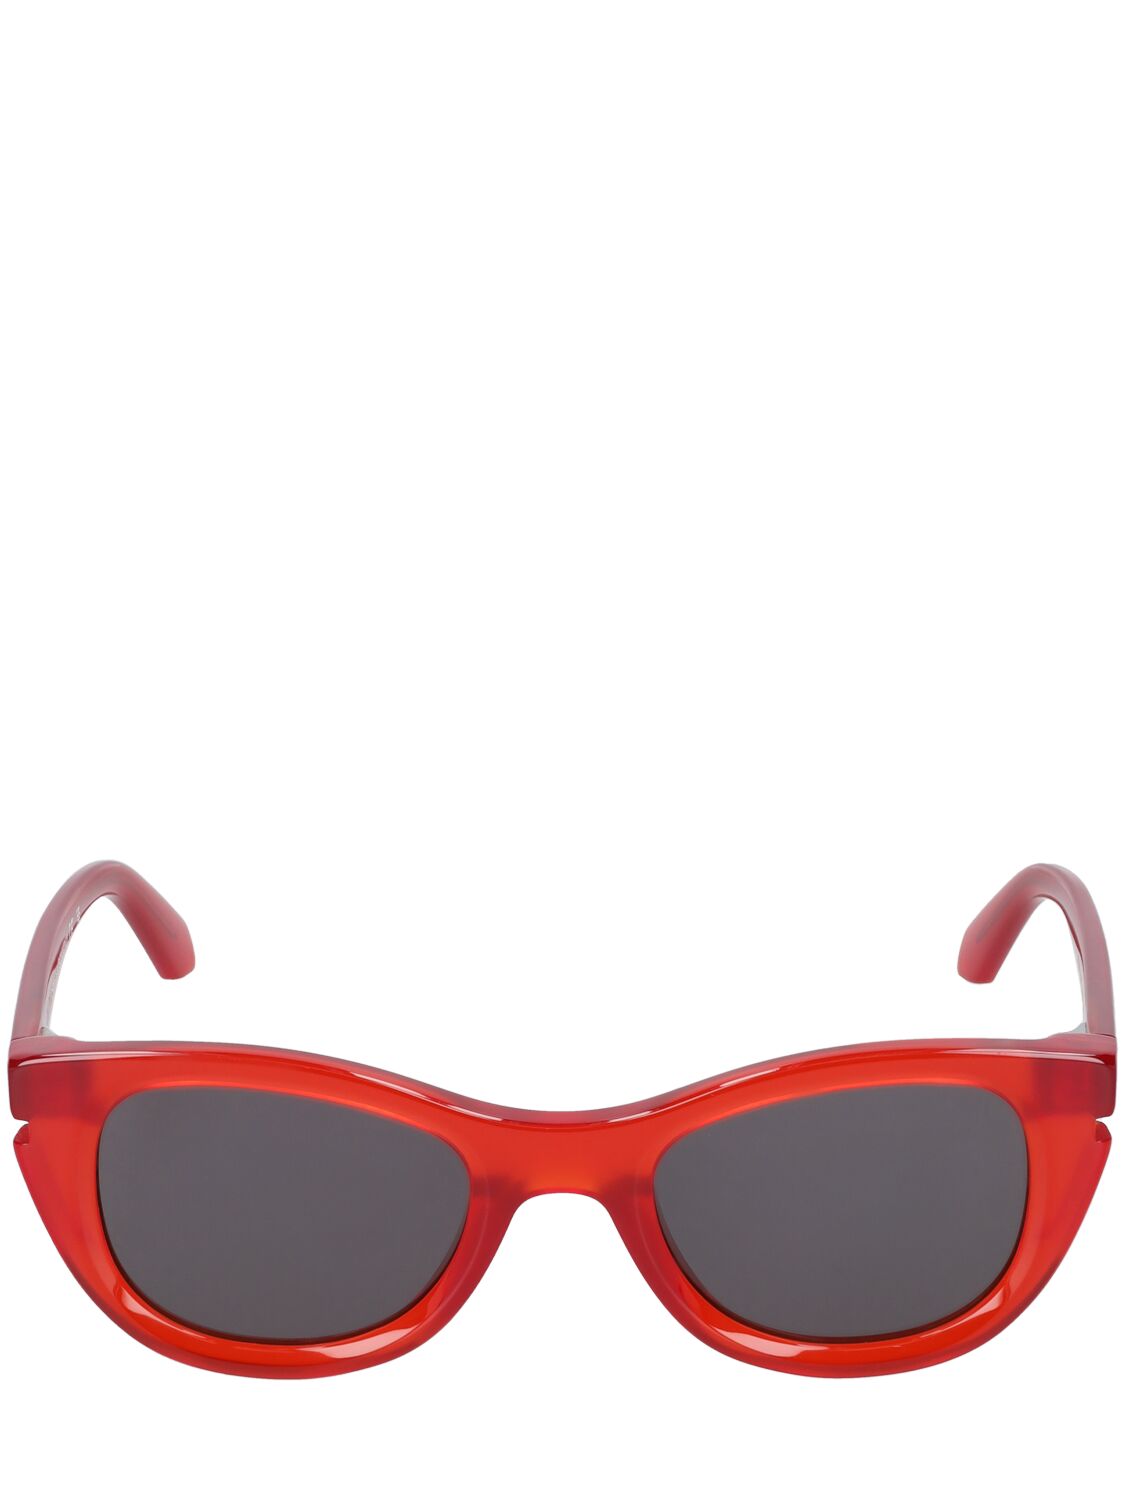 Image of Boulder Acetate Sunglasses